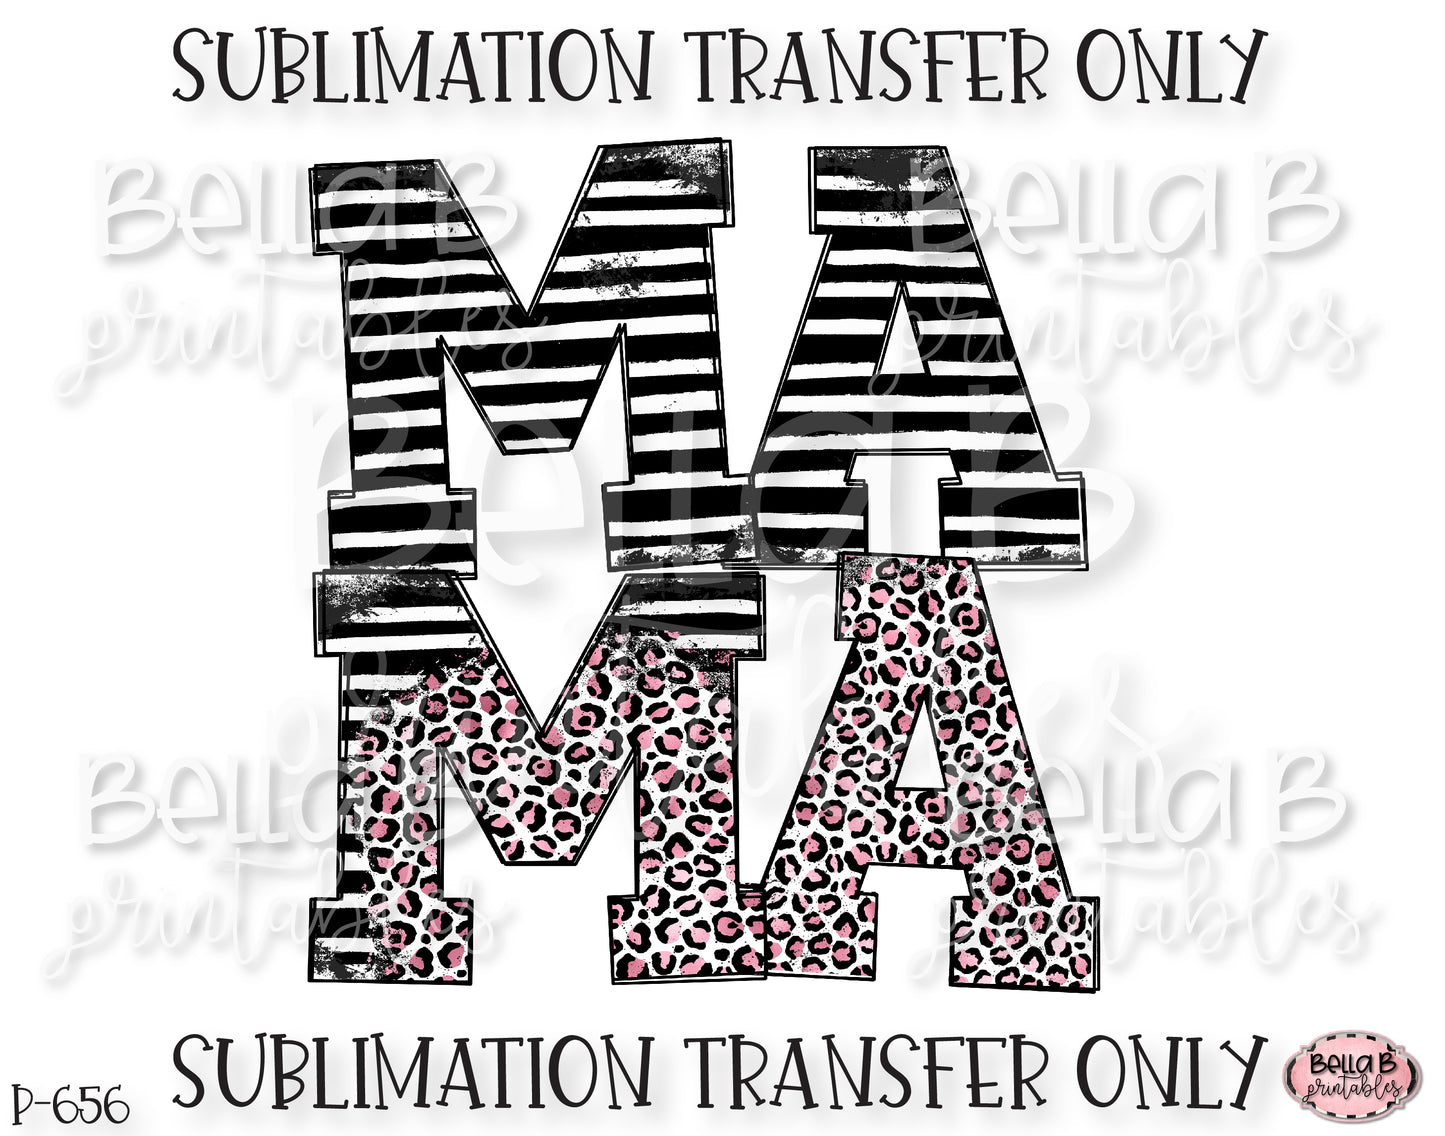 Leopard Print Mama Sublimation Transfer, Ready To Press, Heat Press Transfer, Sublimation Print